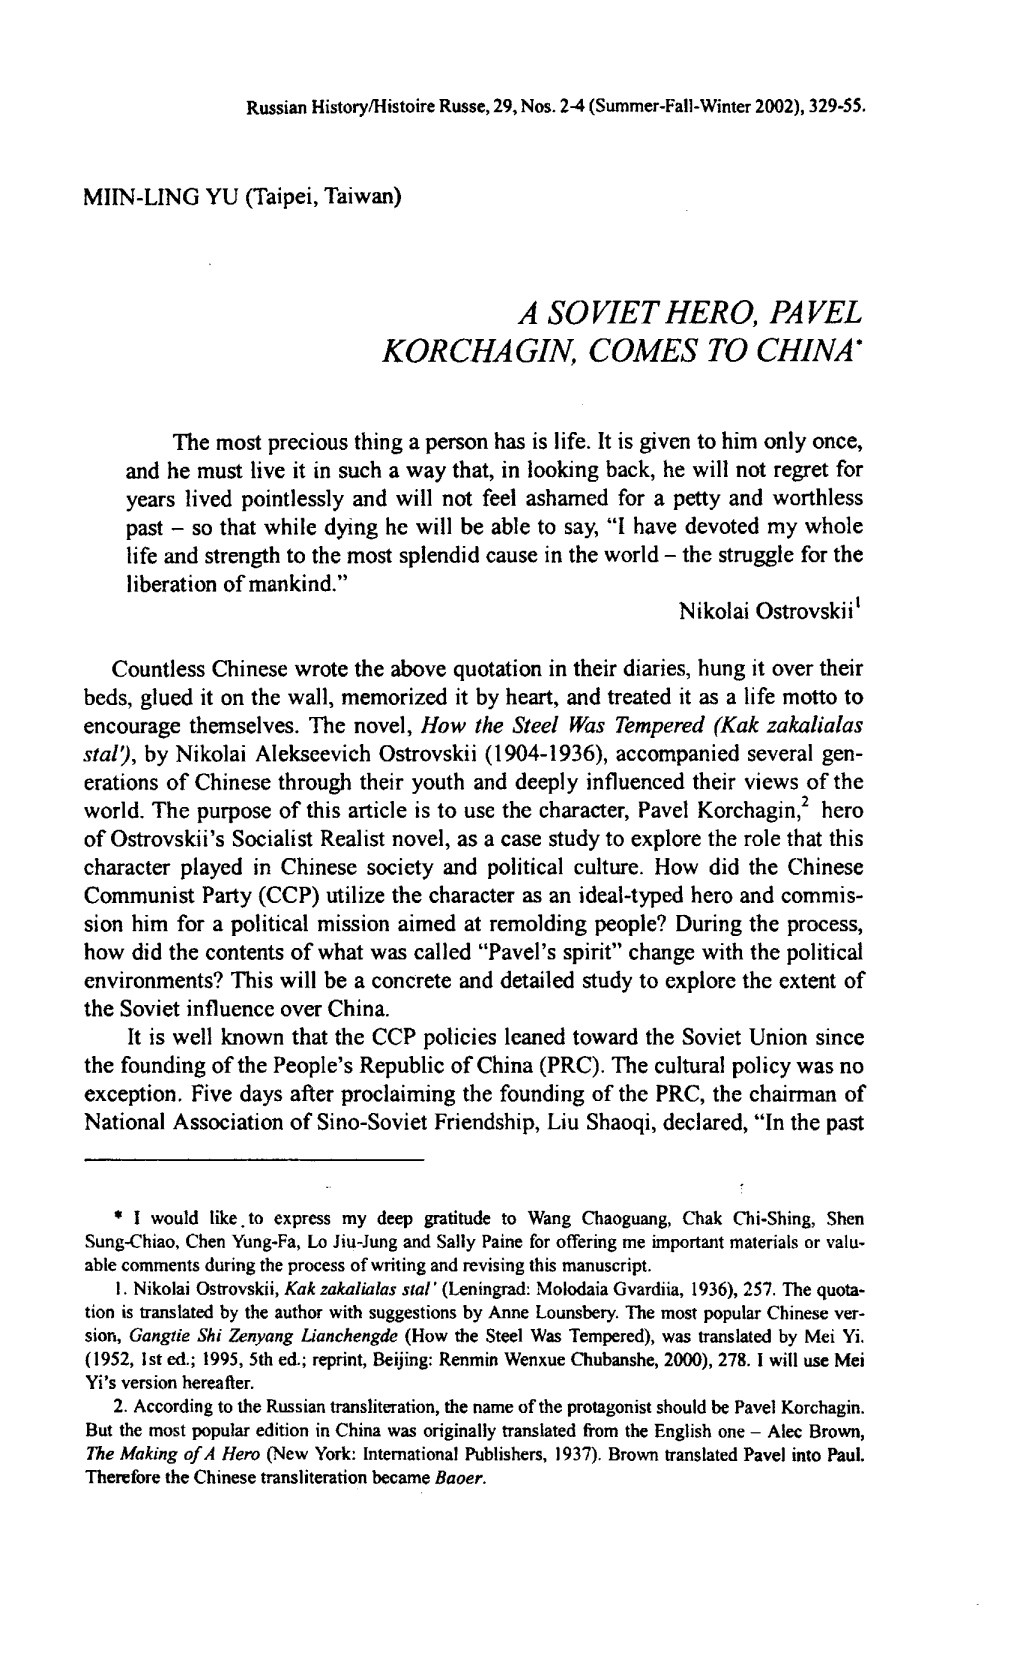 A Soviet Hero, Pavel Korchagin, Comes to China*